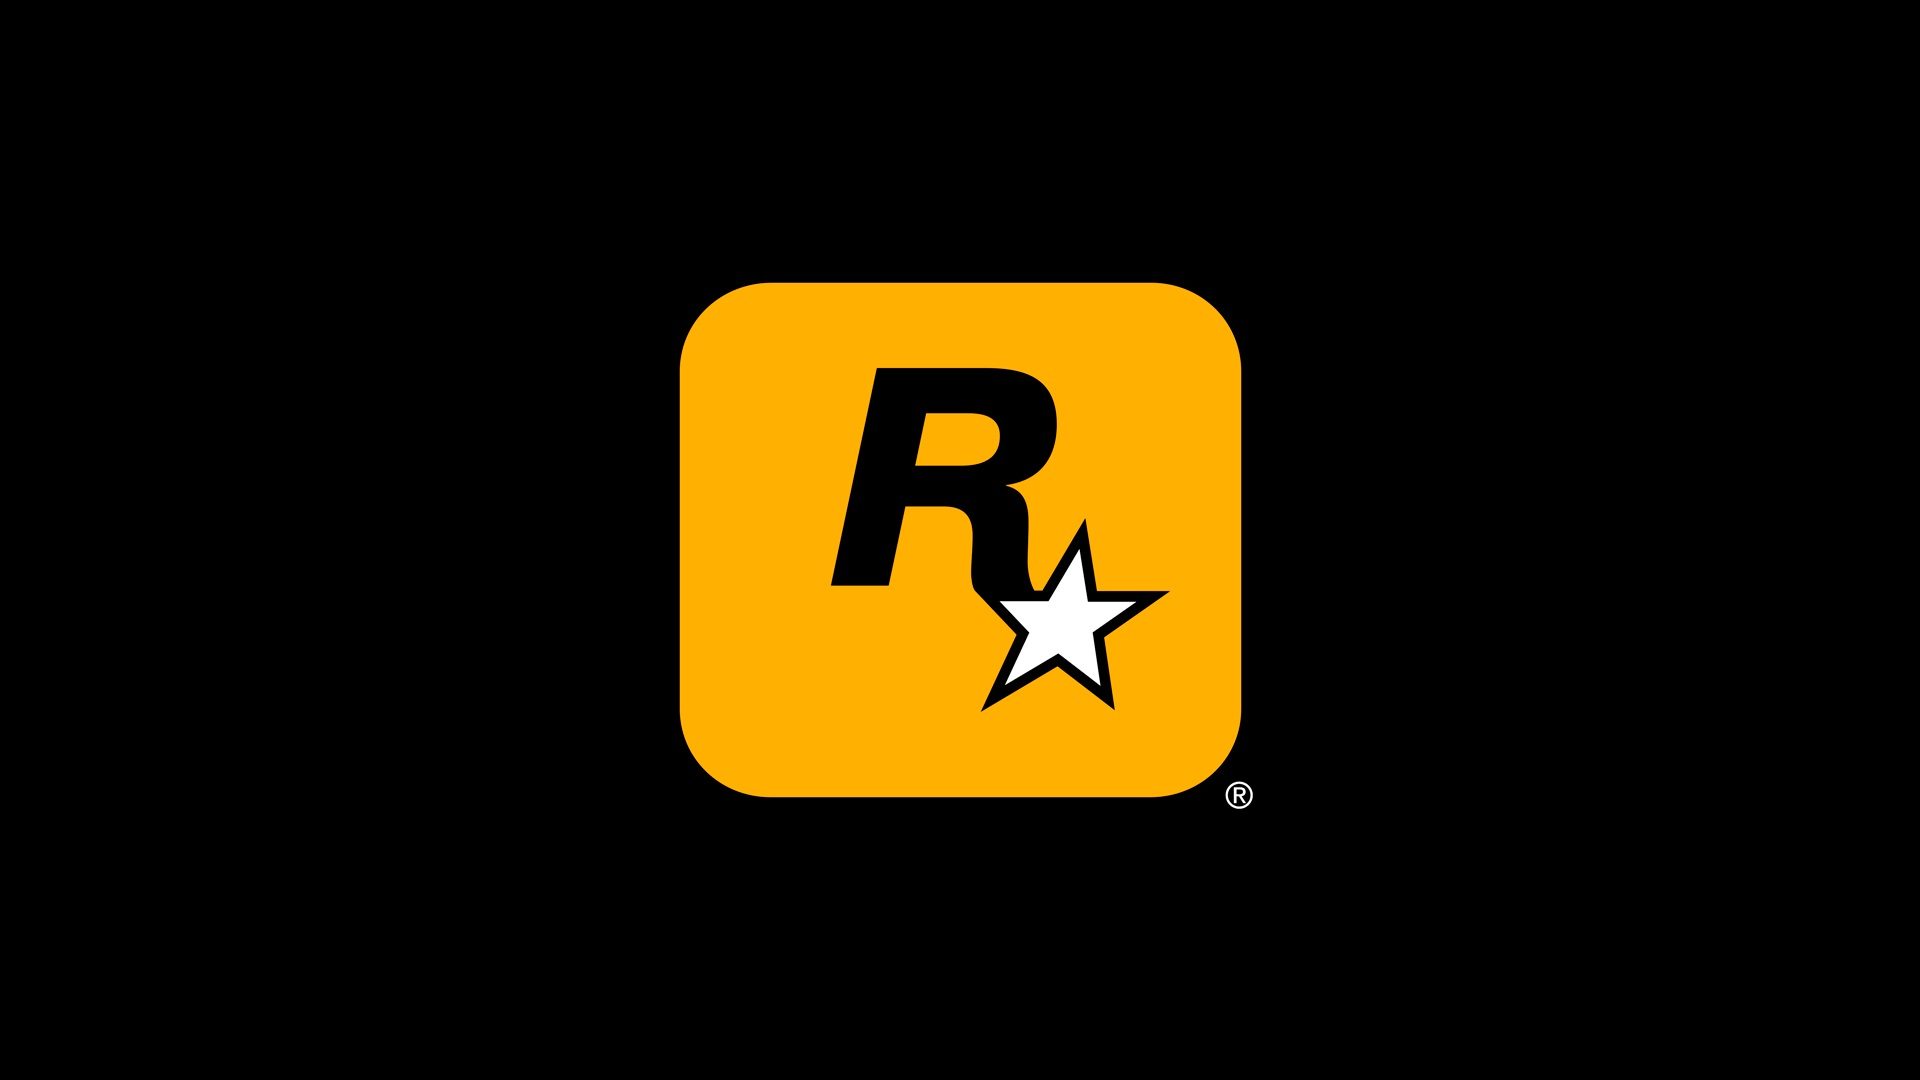 Landing page Rockstar Games - Redesign